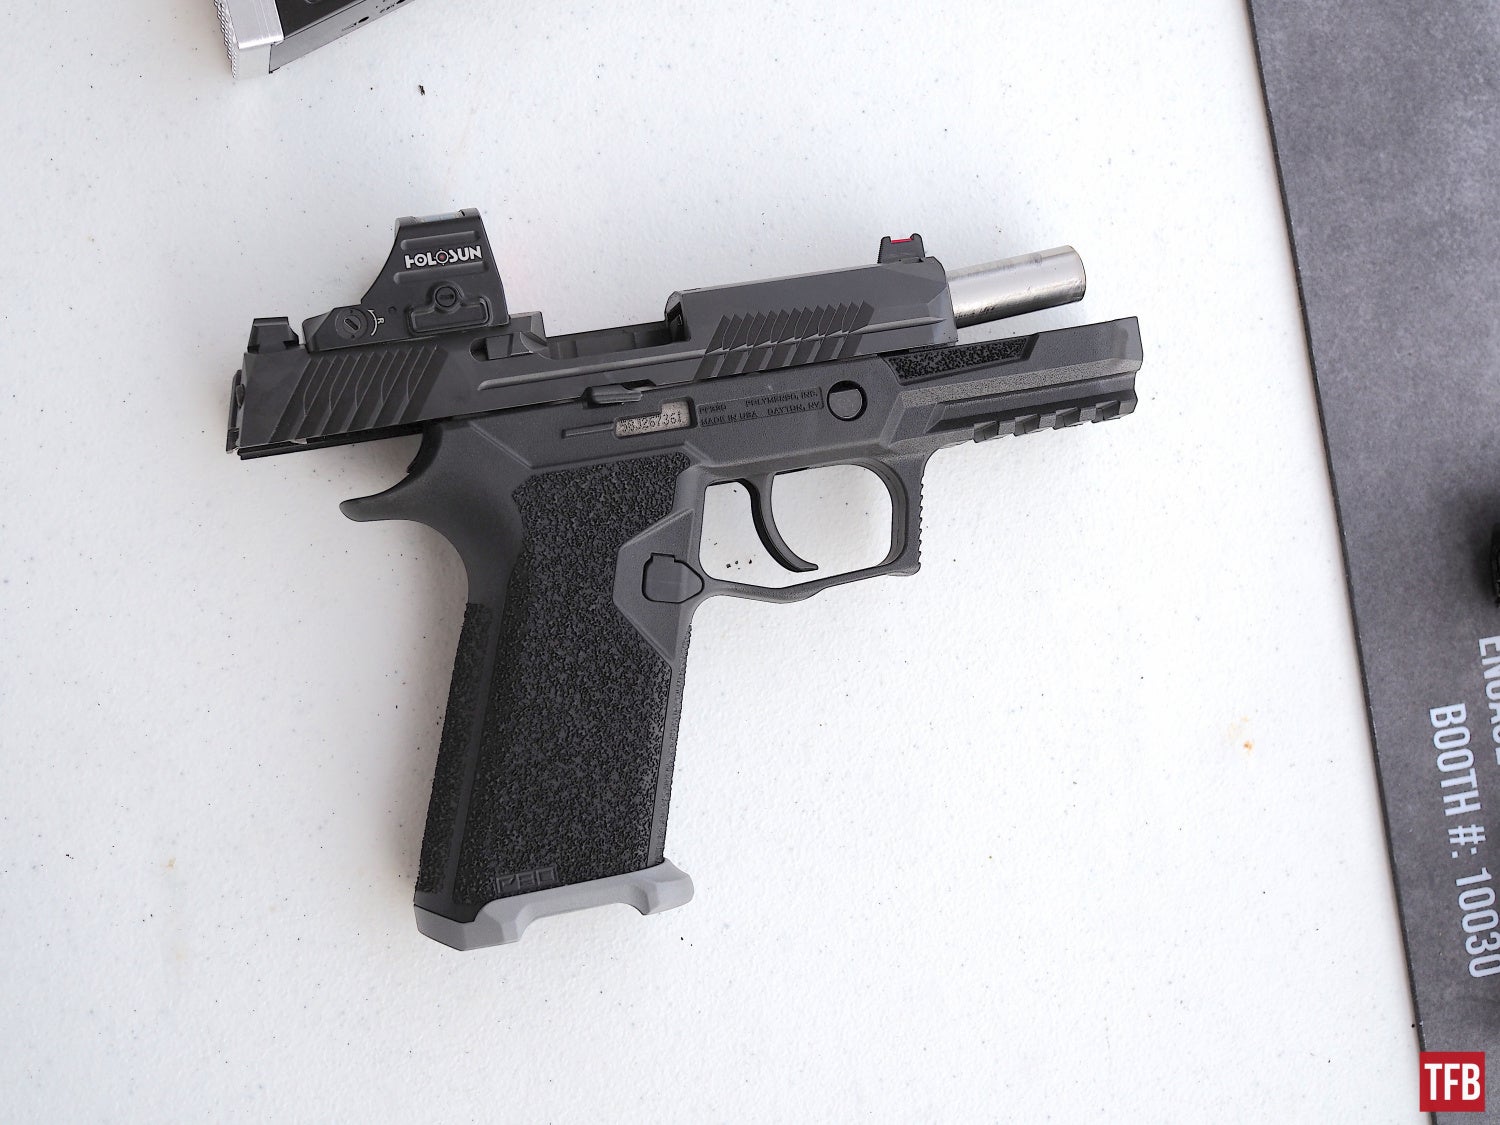 PF320PTEX Pistol Kit from Polymer80